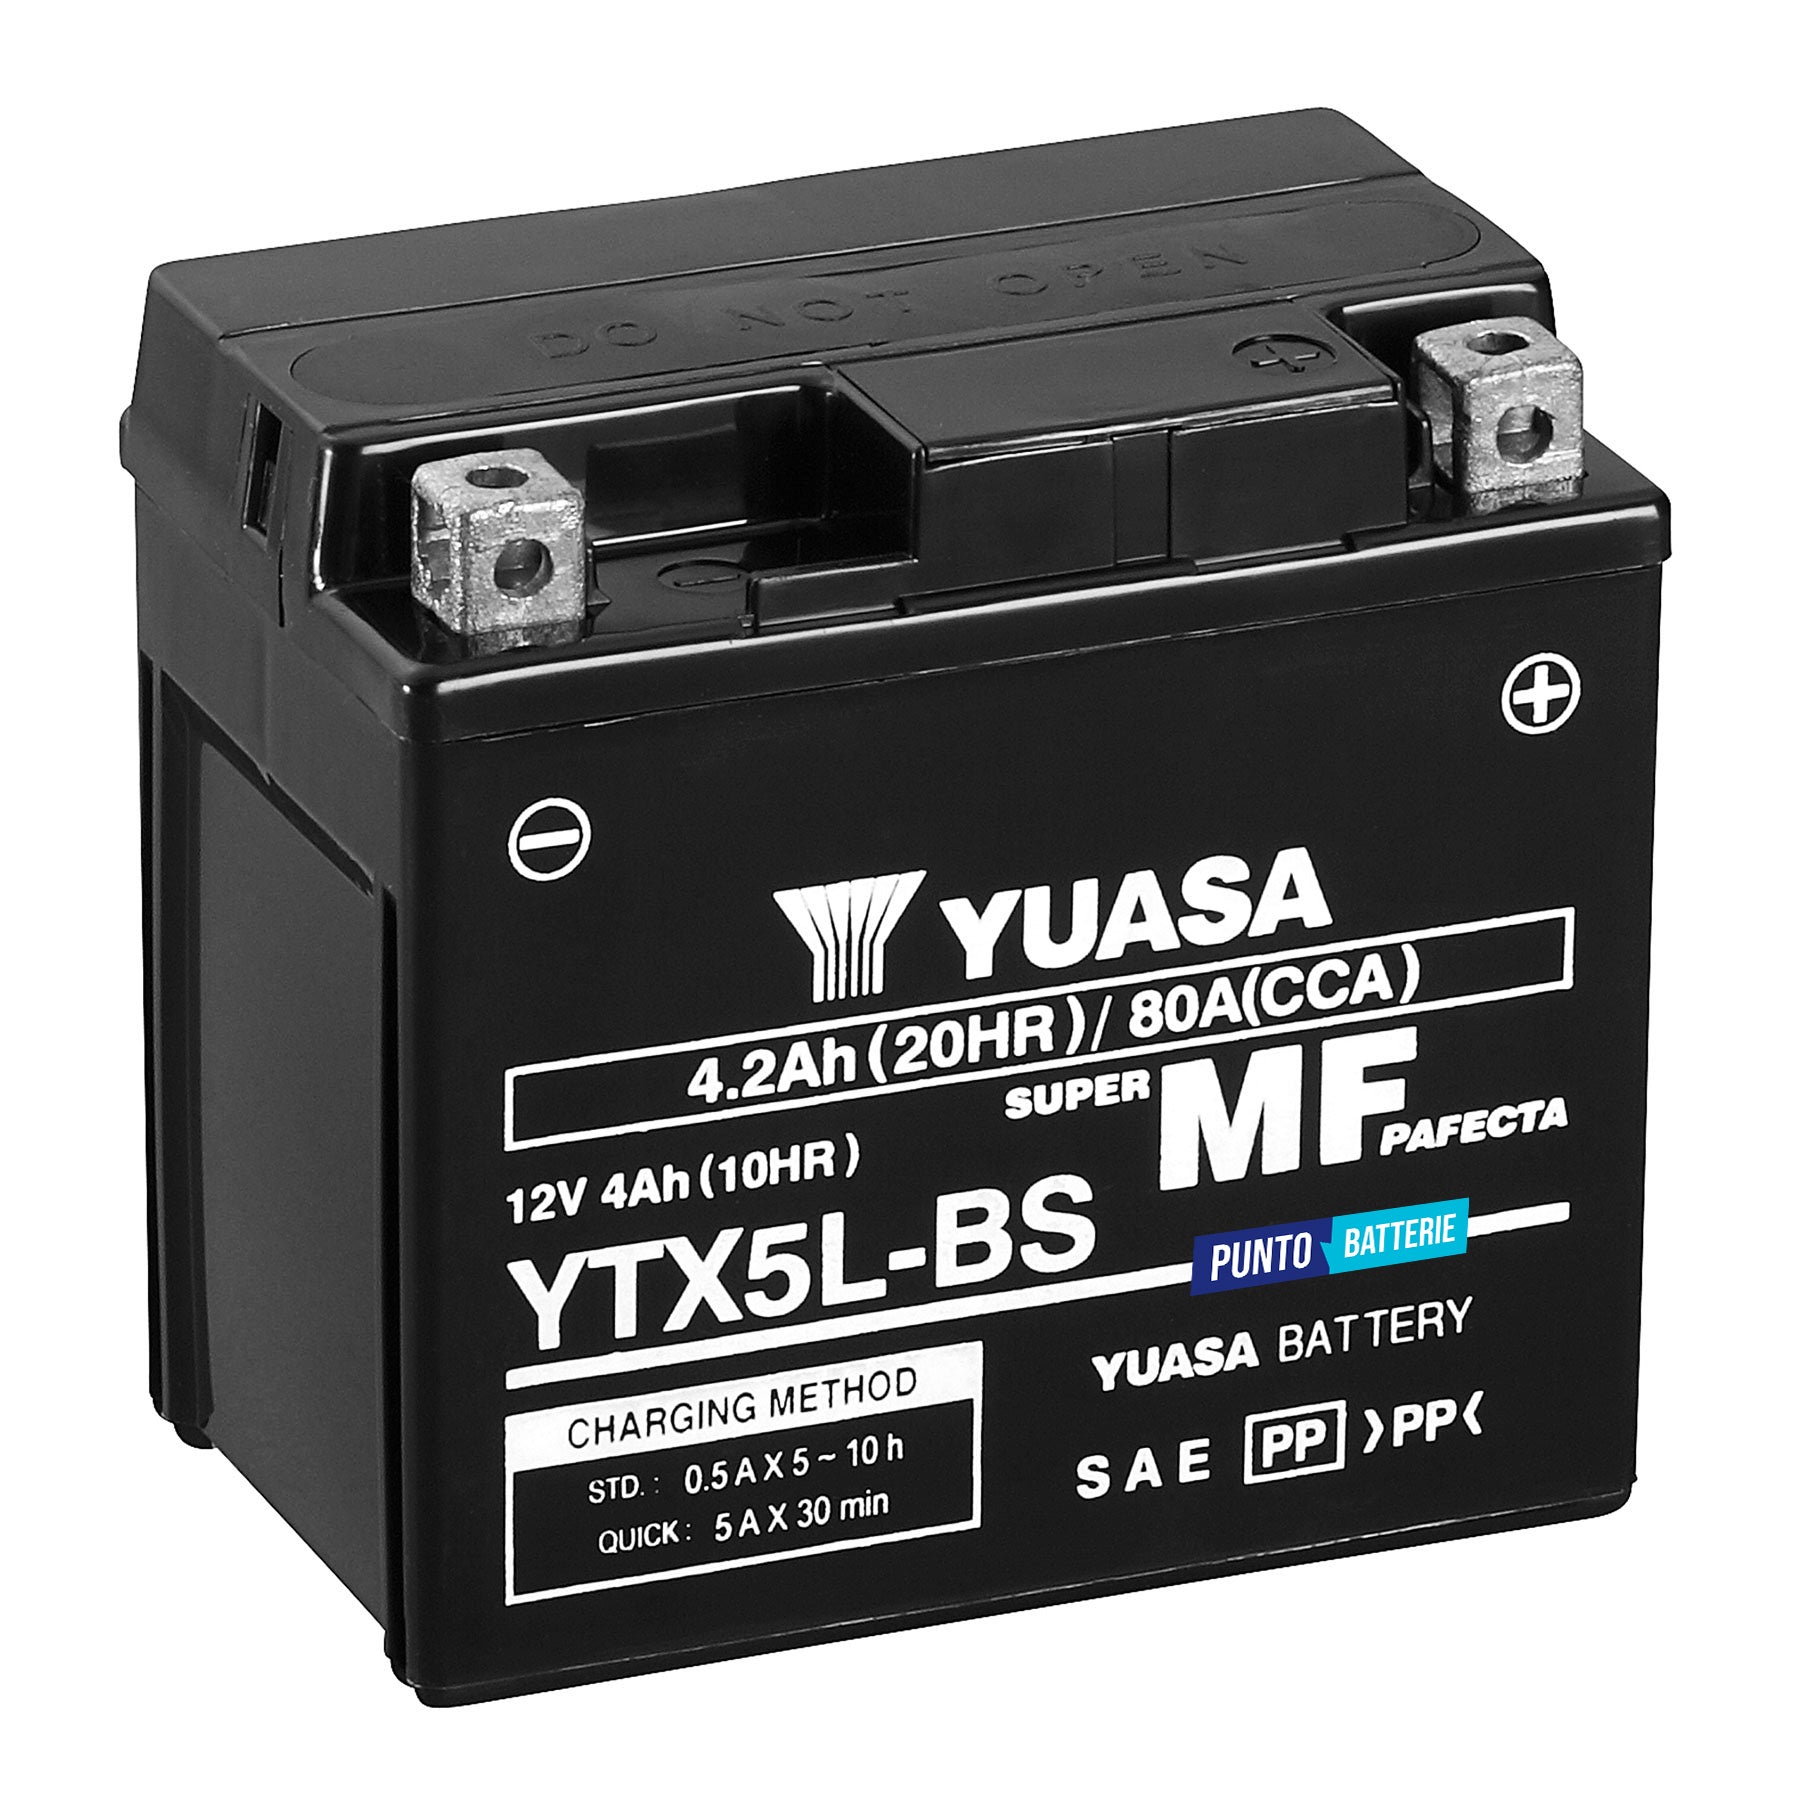 Batteria originale Yuasa YTX YTX5L-BS, dimensioni 115 x 72 x 107, polo positivo a destra, 12 volt, 4 amperora, 80 ampere. Batteria per moto, scooter e powersport.